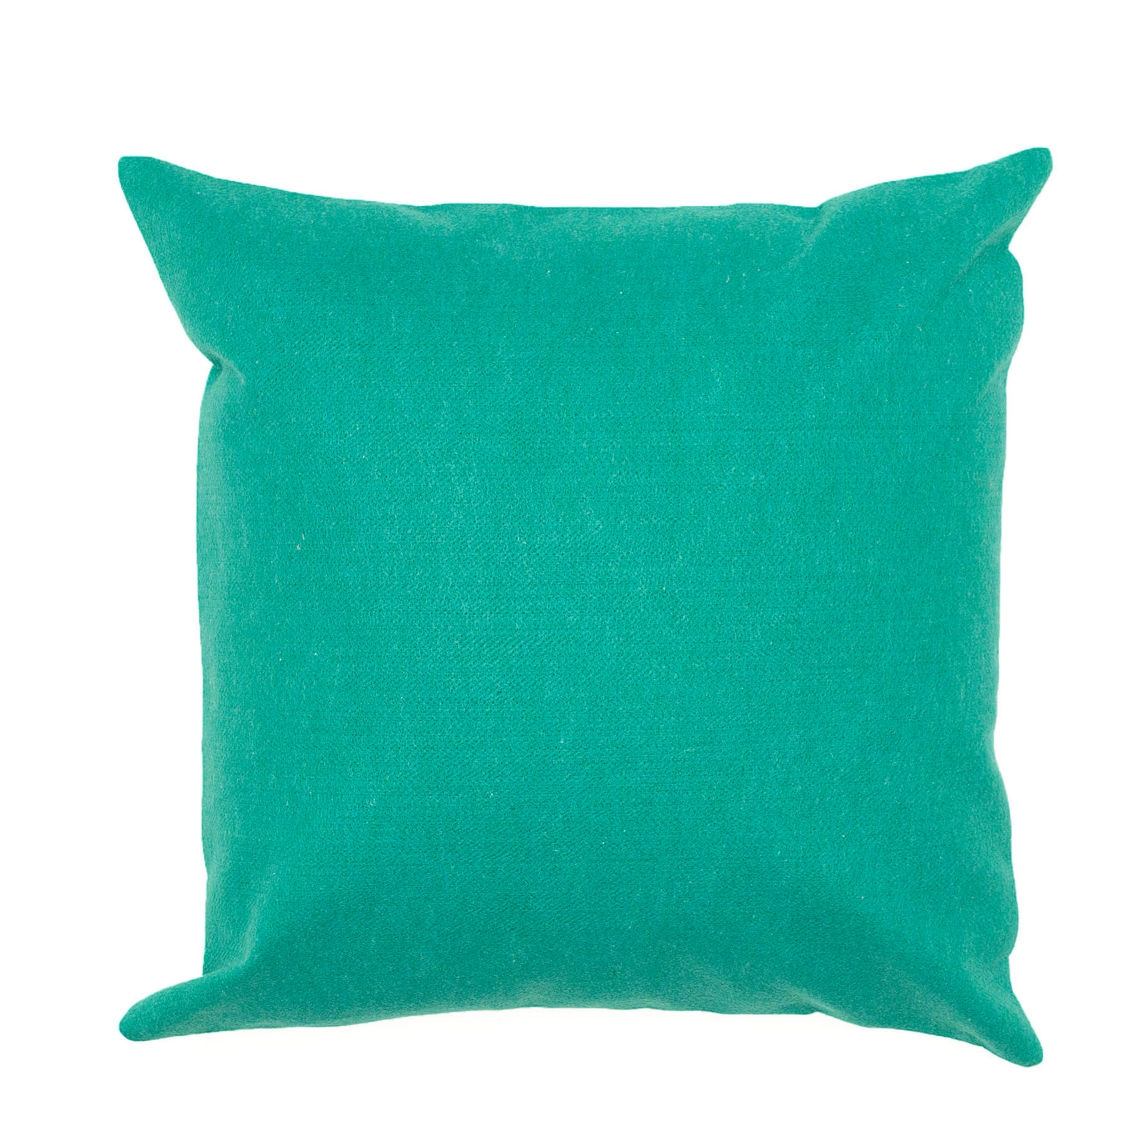 Liora Manne Visions Coastal Nautical Indoor Outdoor Lumbar Pillow - Image 2 of 2